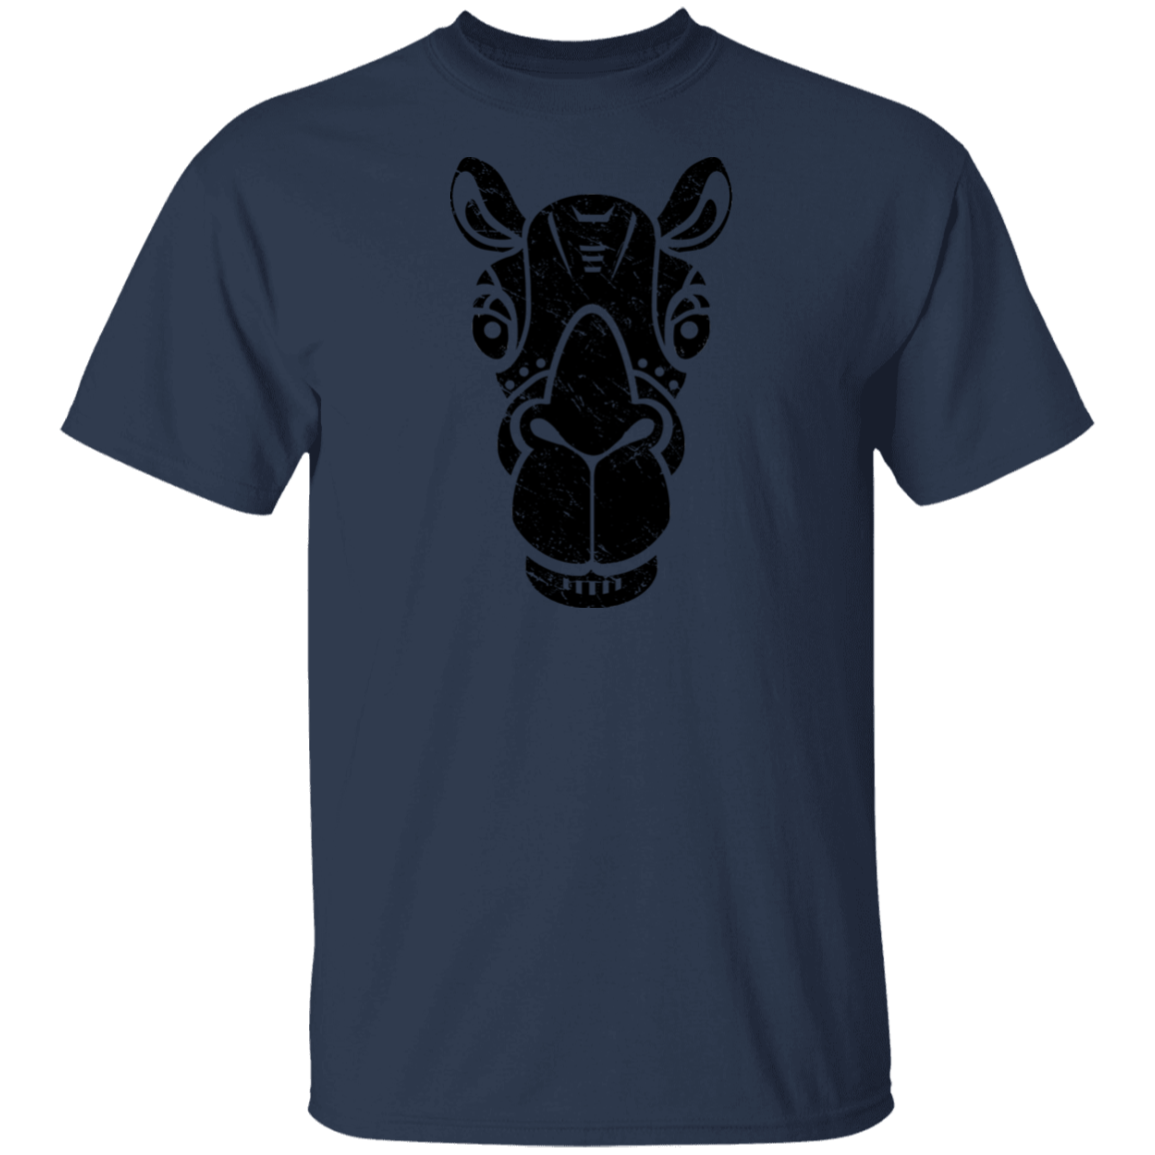 Black Distressed Emblem T-Shirt for Kids (Camel/Bob)